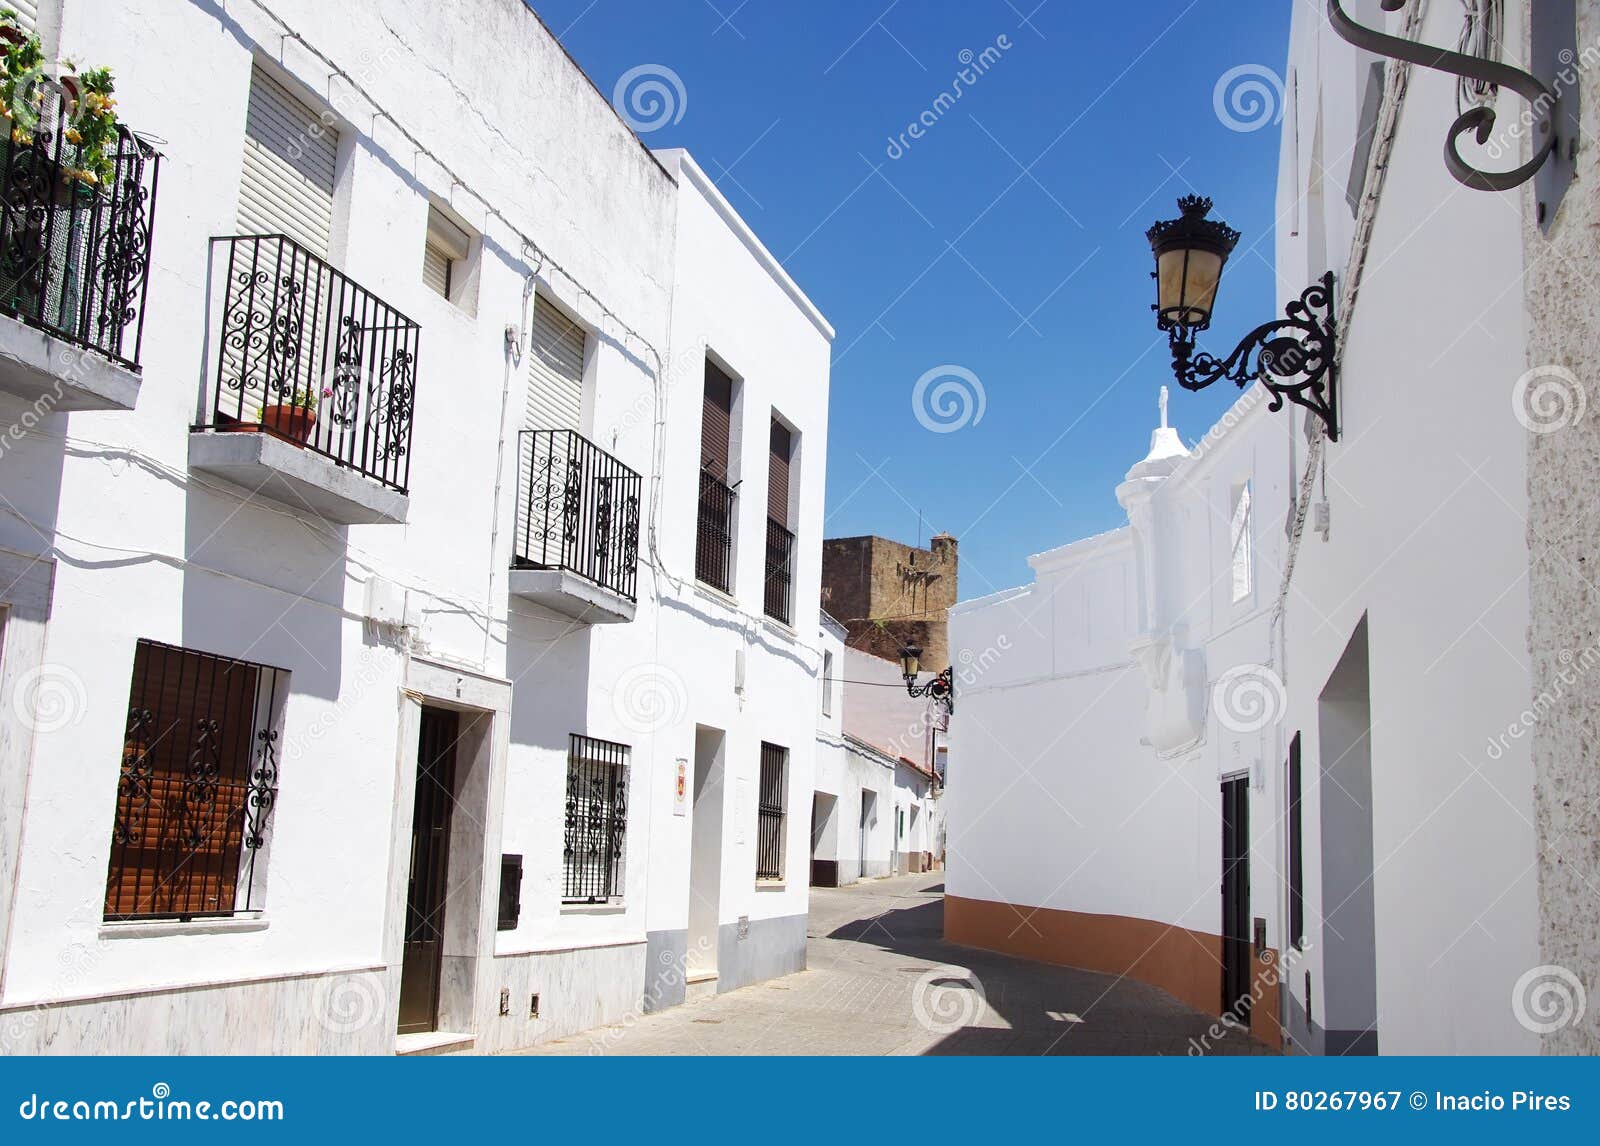 street of olivenza, extremadura region